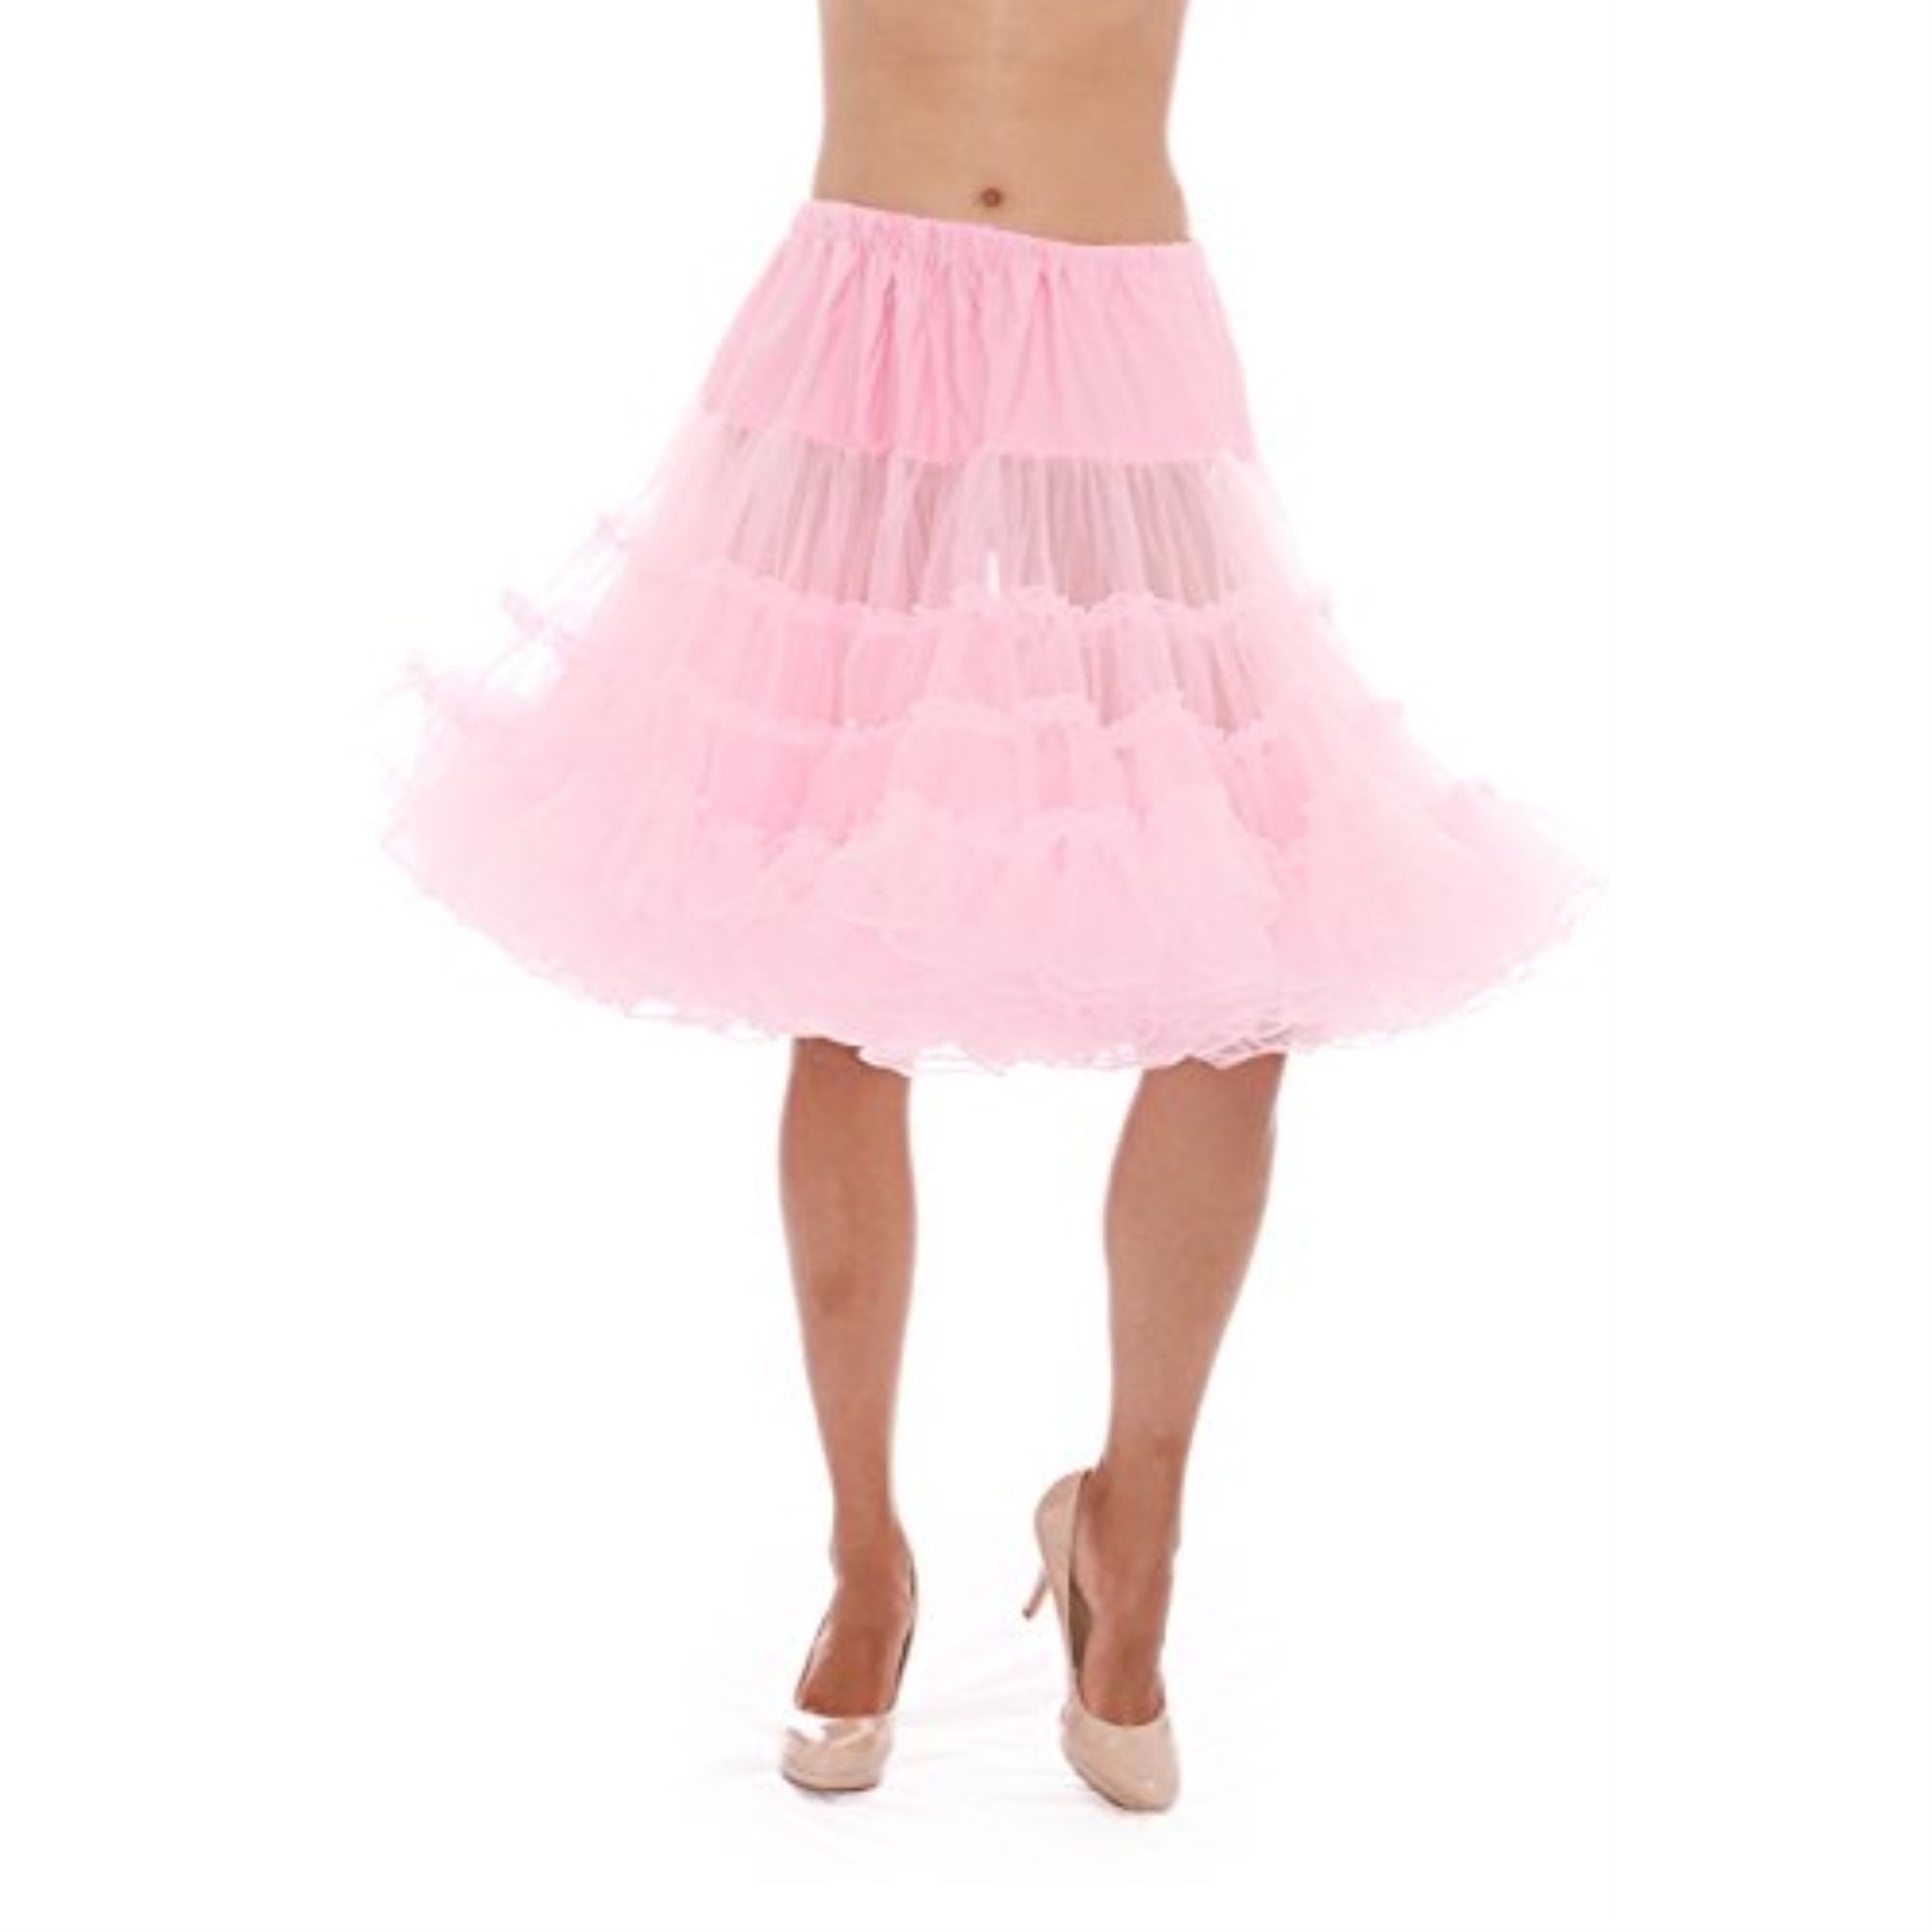 Dance Petticoat Pettiskirt Underskirt Tutu Crinoline - Pink